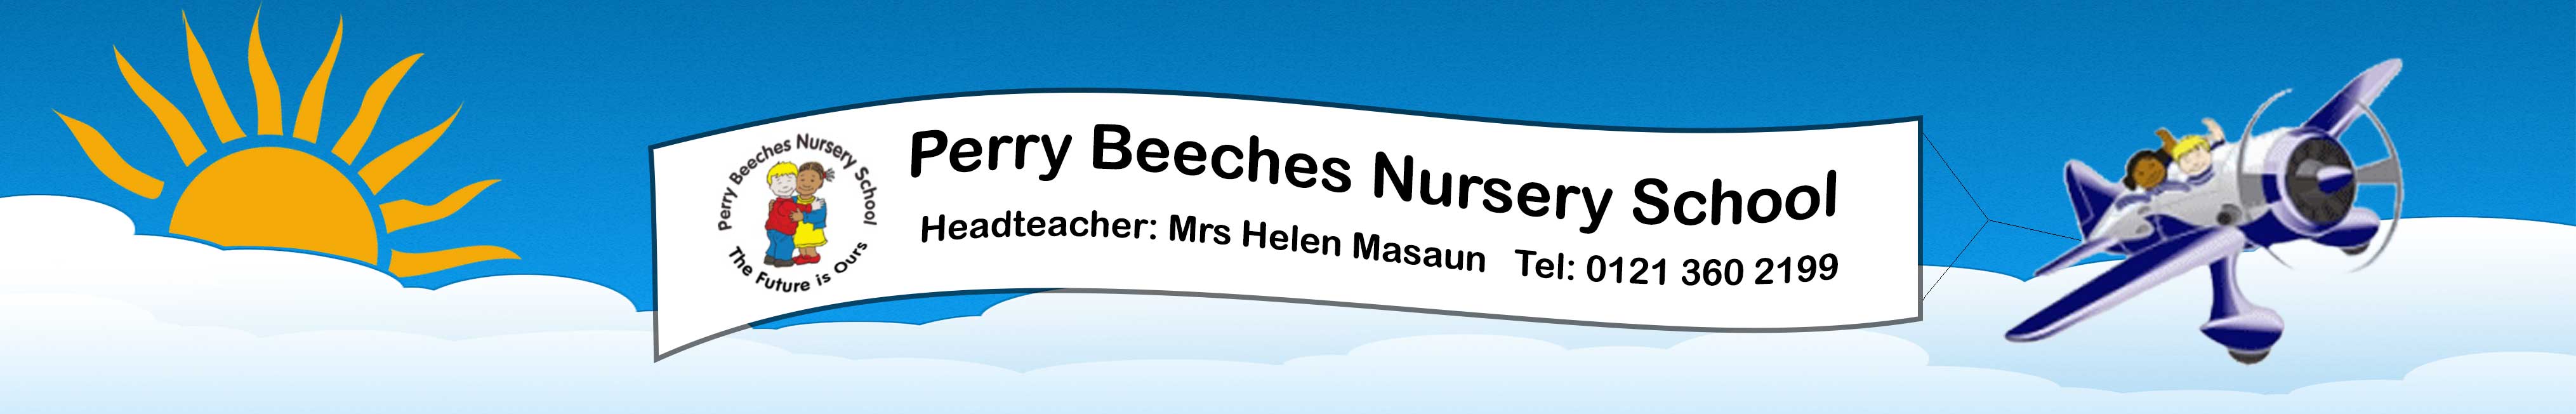 Perry Beeches Nursery School